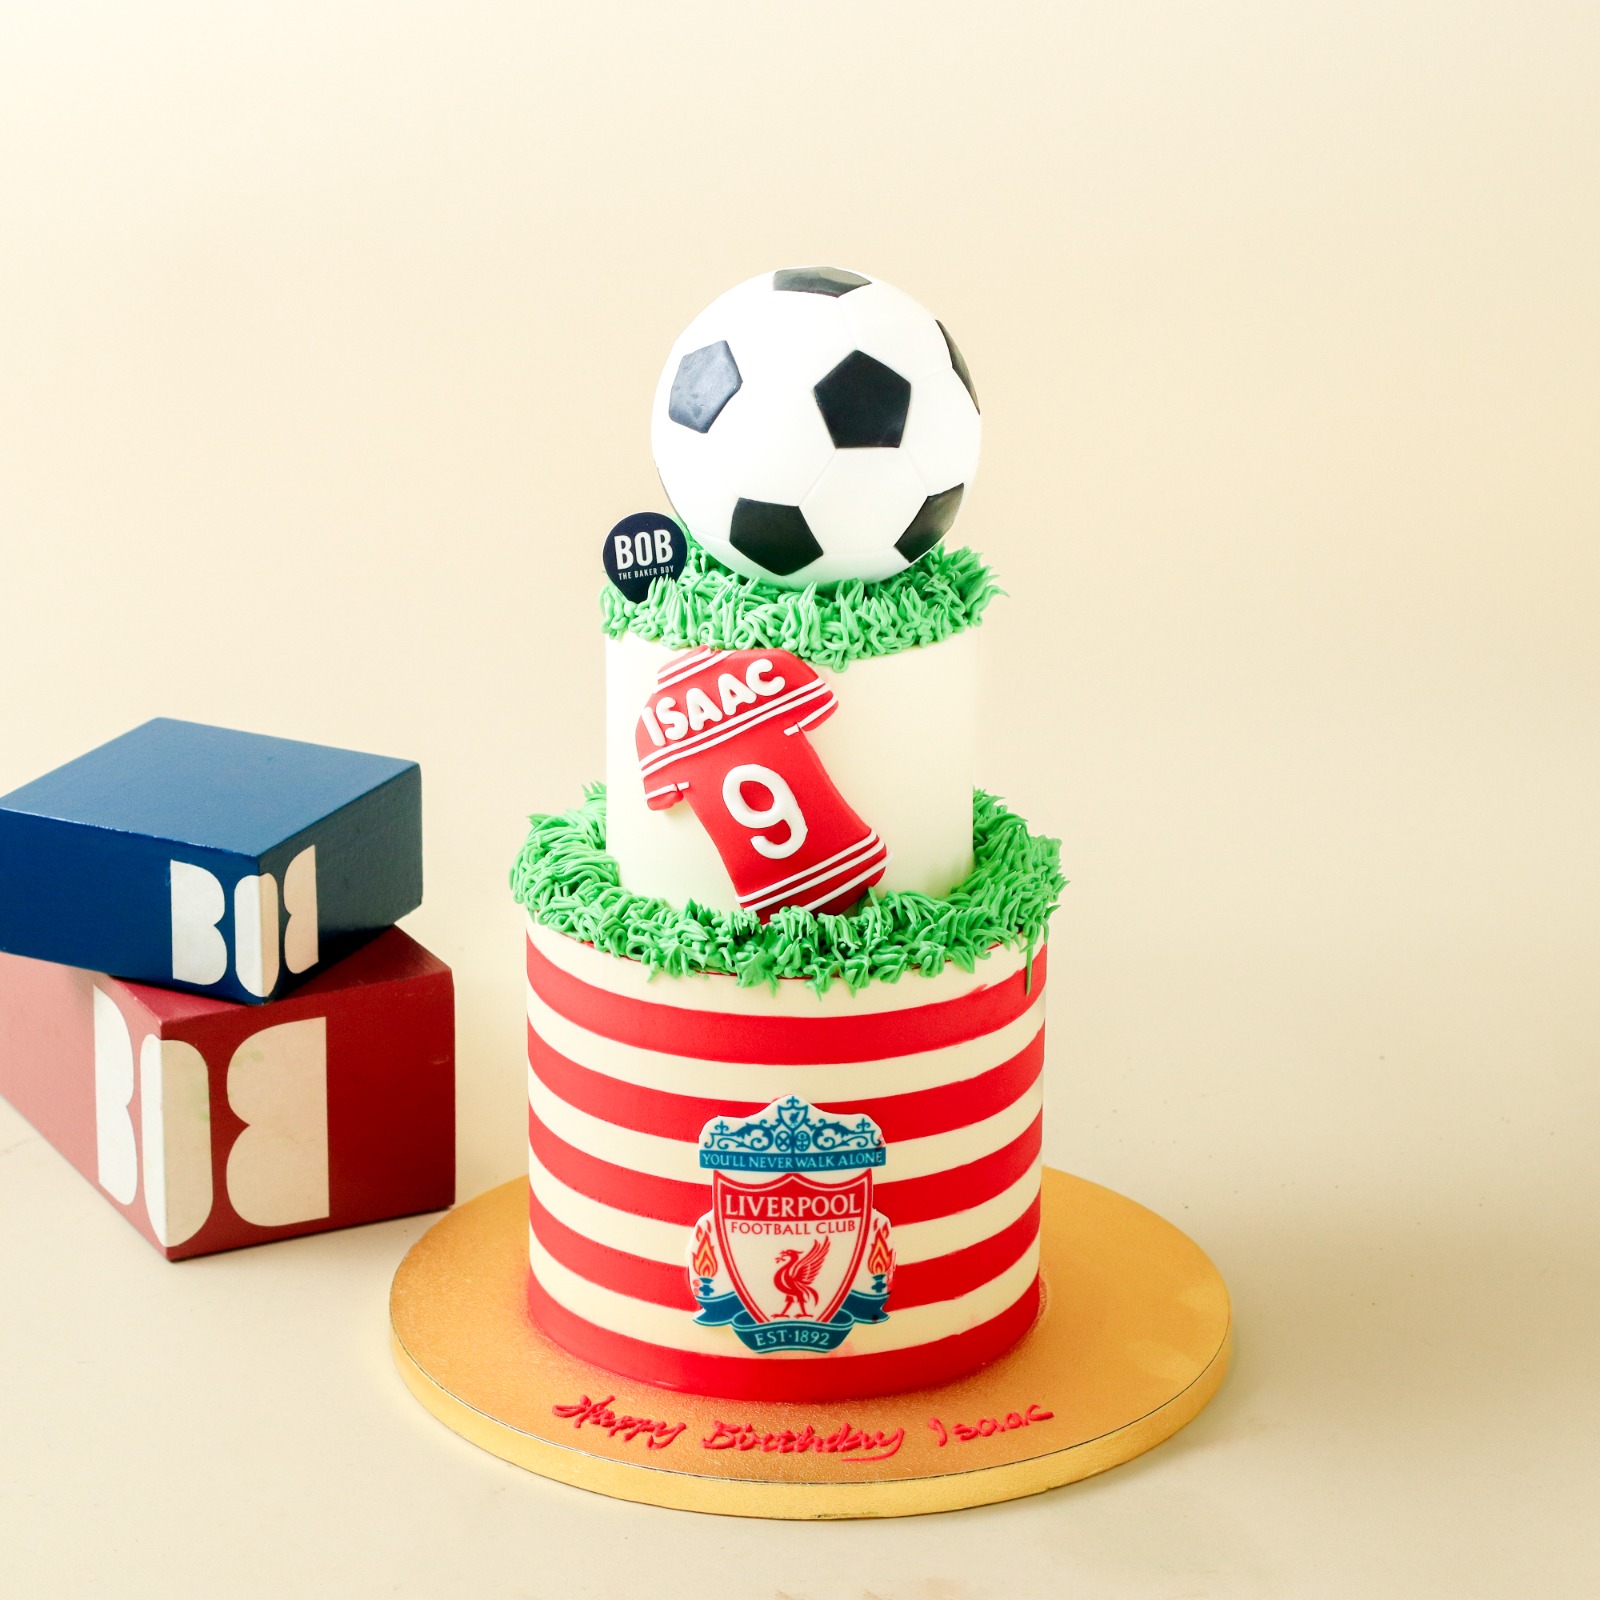 1,115 Football Birthday Cake Images, Stock Photos & Vectors | Shutterstock